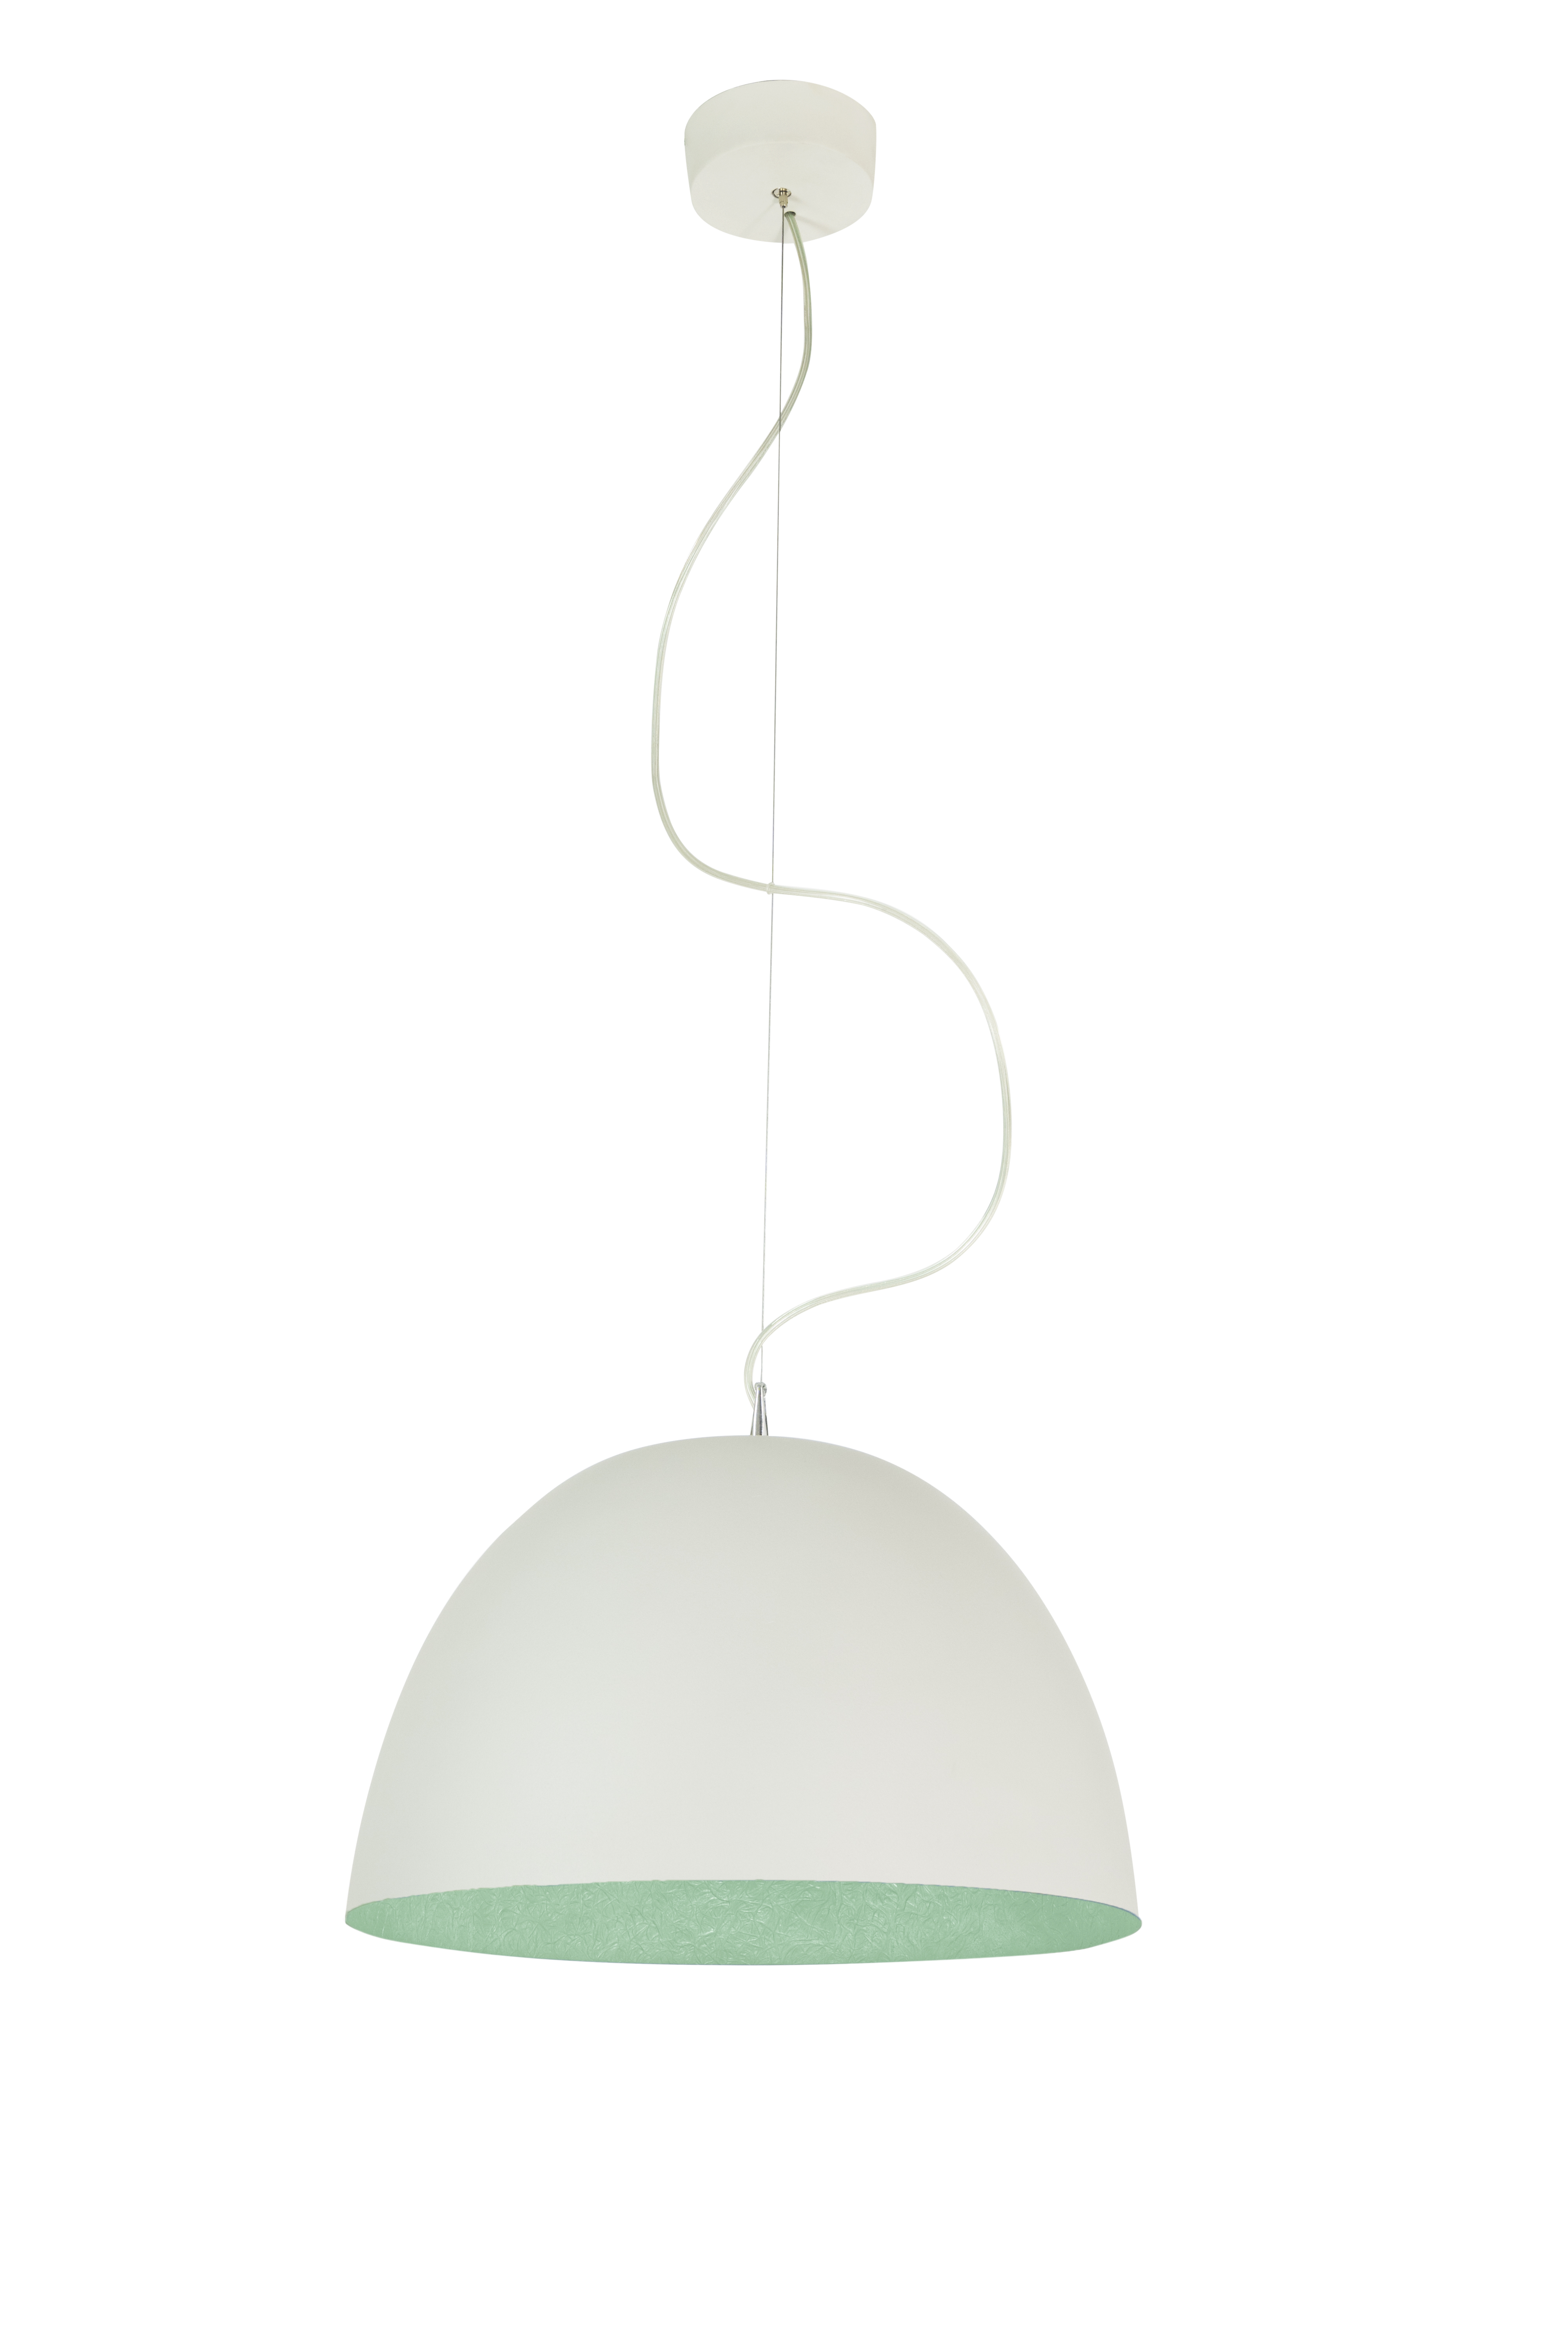 Pendant Lamp H2O Cemento In-Es Artdesign Collection Matt Color White Turquoise Size 27,5 Cm  Diam. 46 Cm